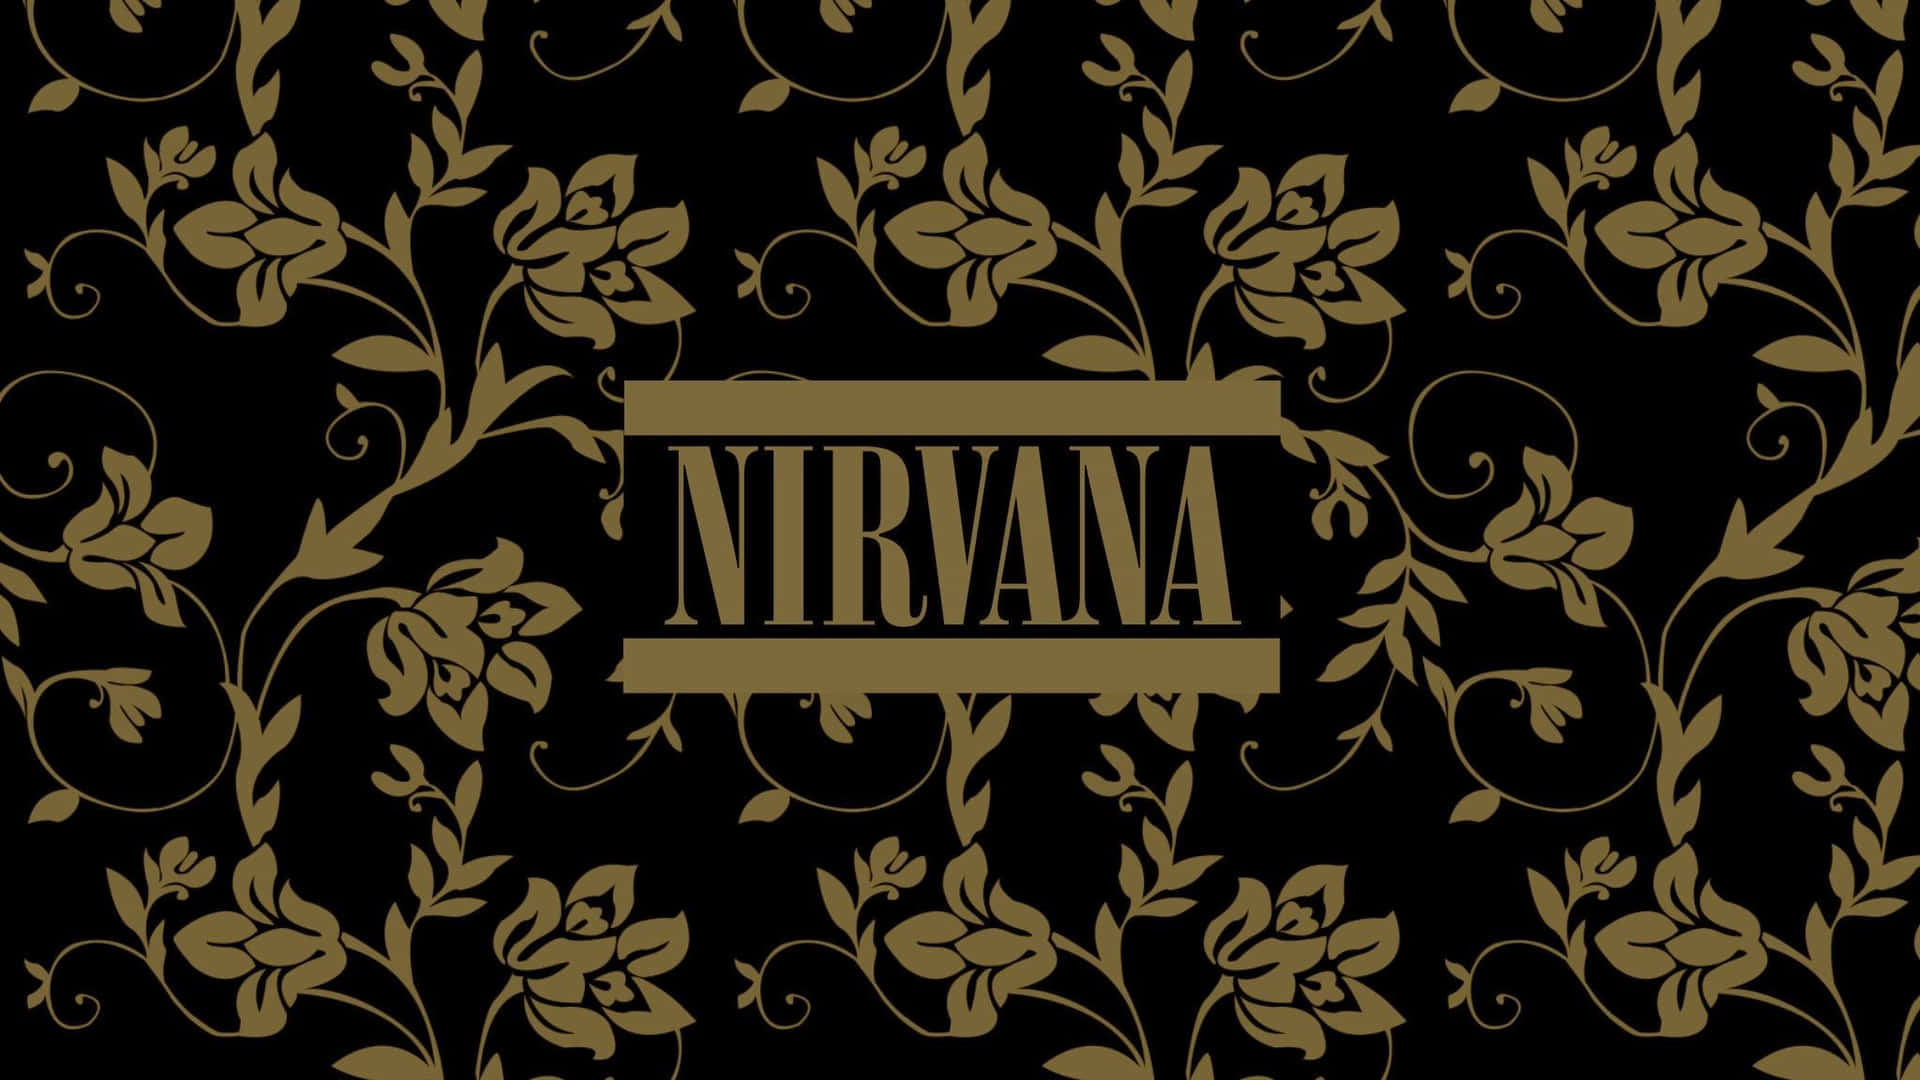 Ellegendario Logo De La Banda Nirvana Con Un Fondo Grunge.